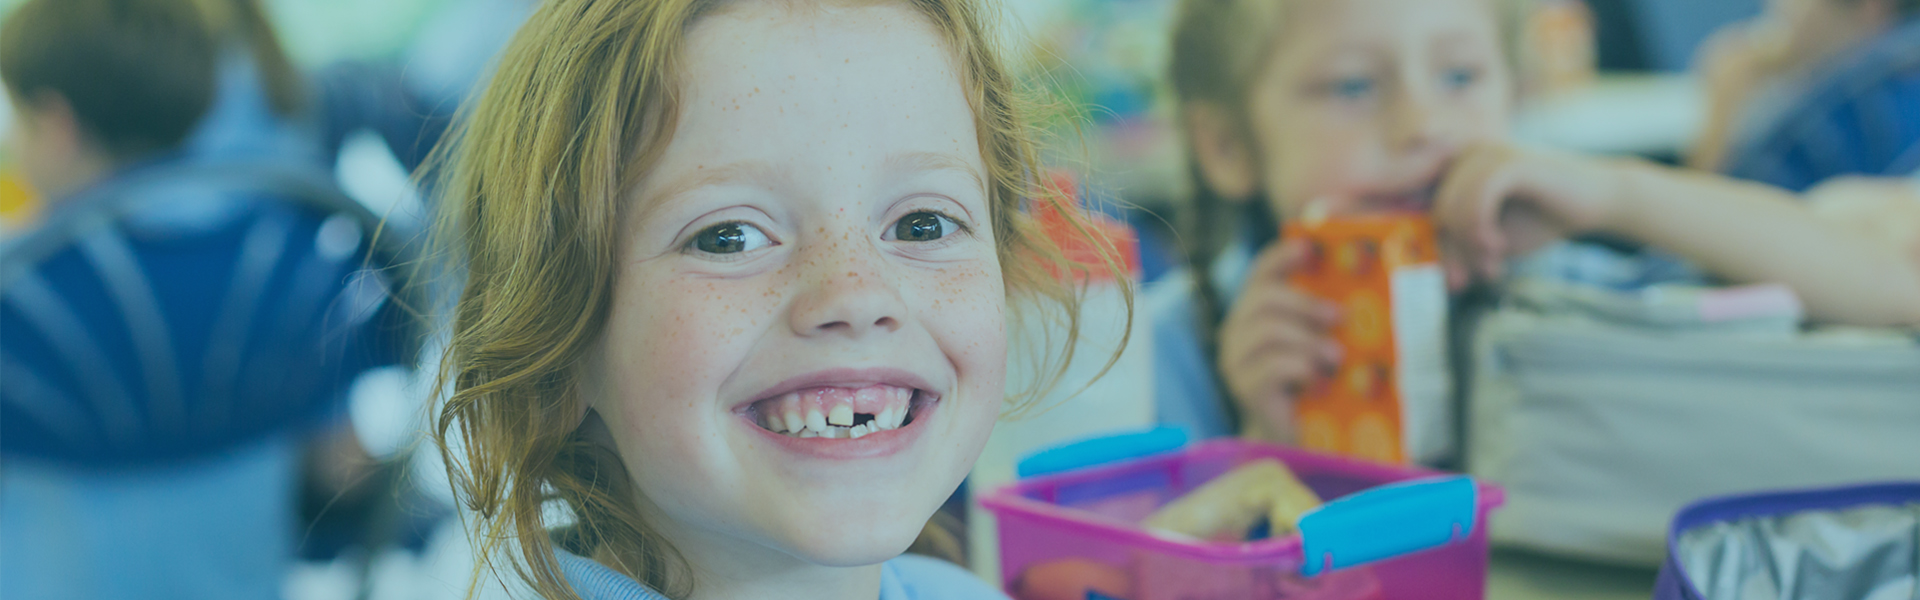 Youth Savings | Child smiling at camera, missing teeth